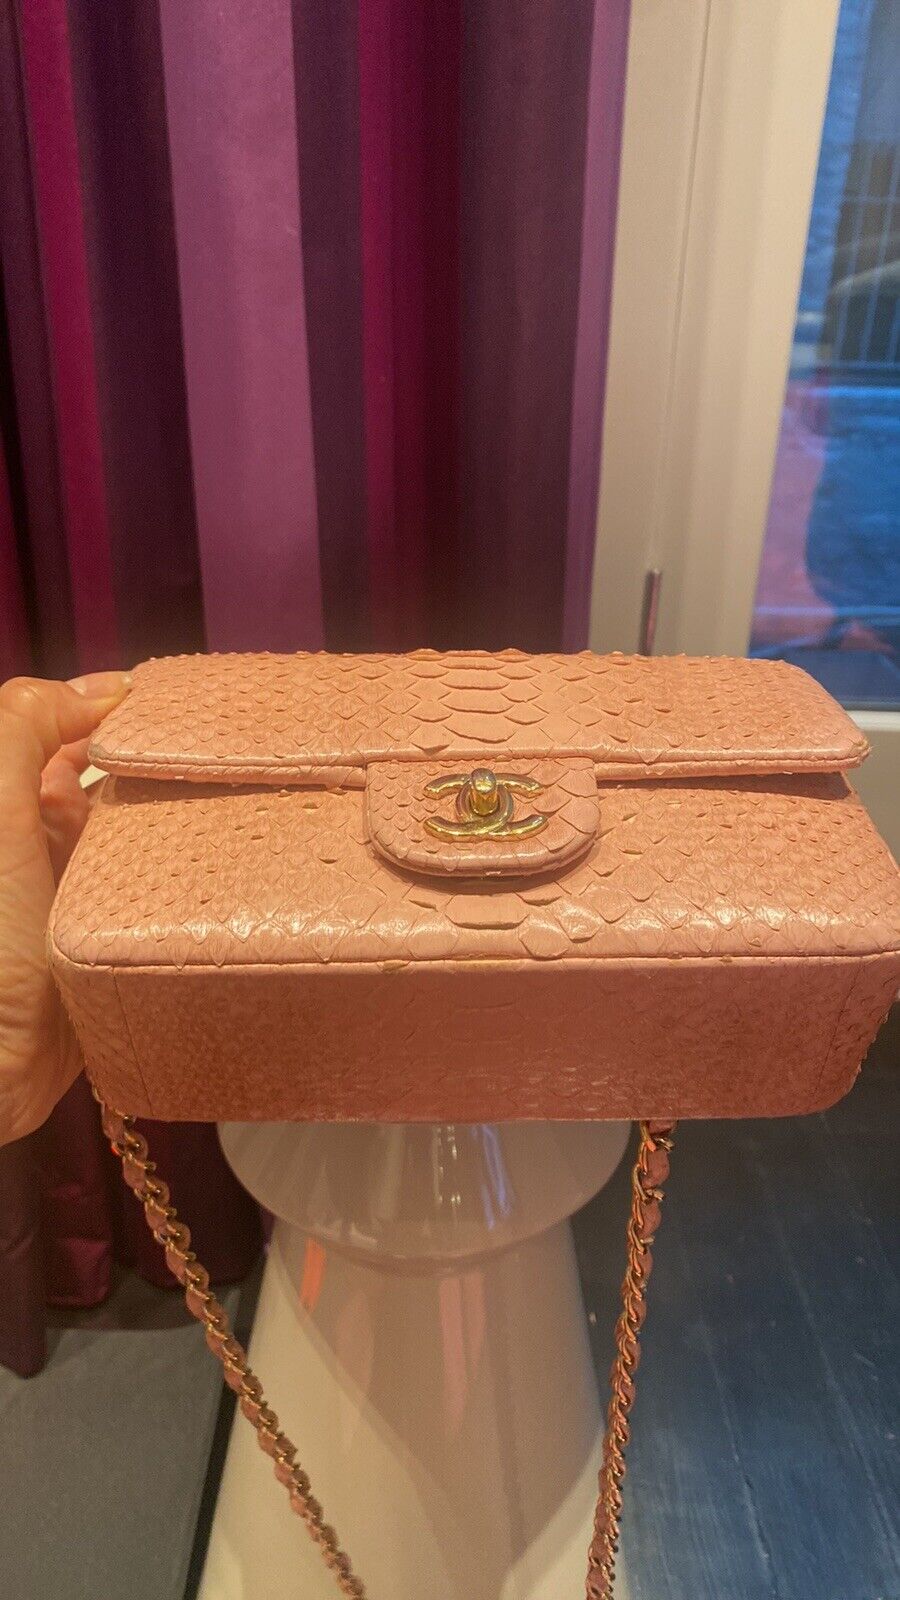 chanel python minie pink bag - image 3